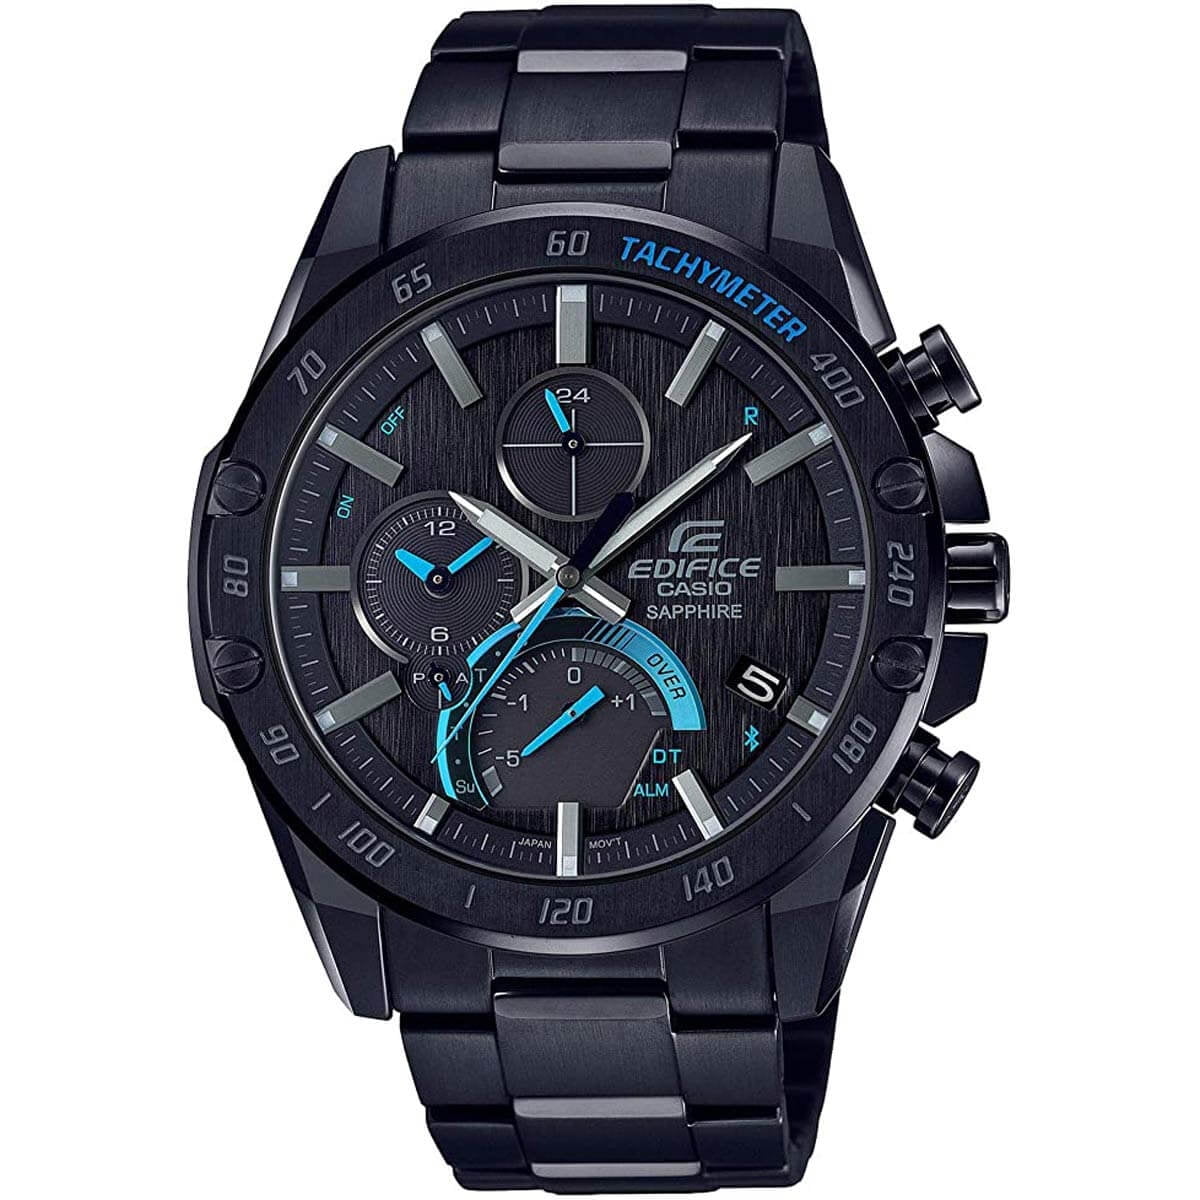 Casio Edifice Infiniti Red Bull Racing Limited Edition Watch ERA 